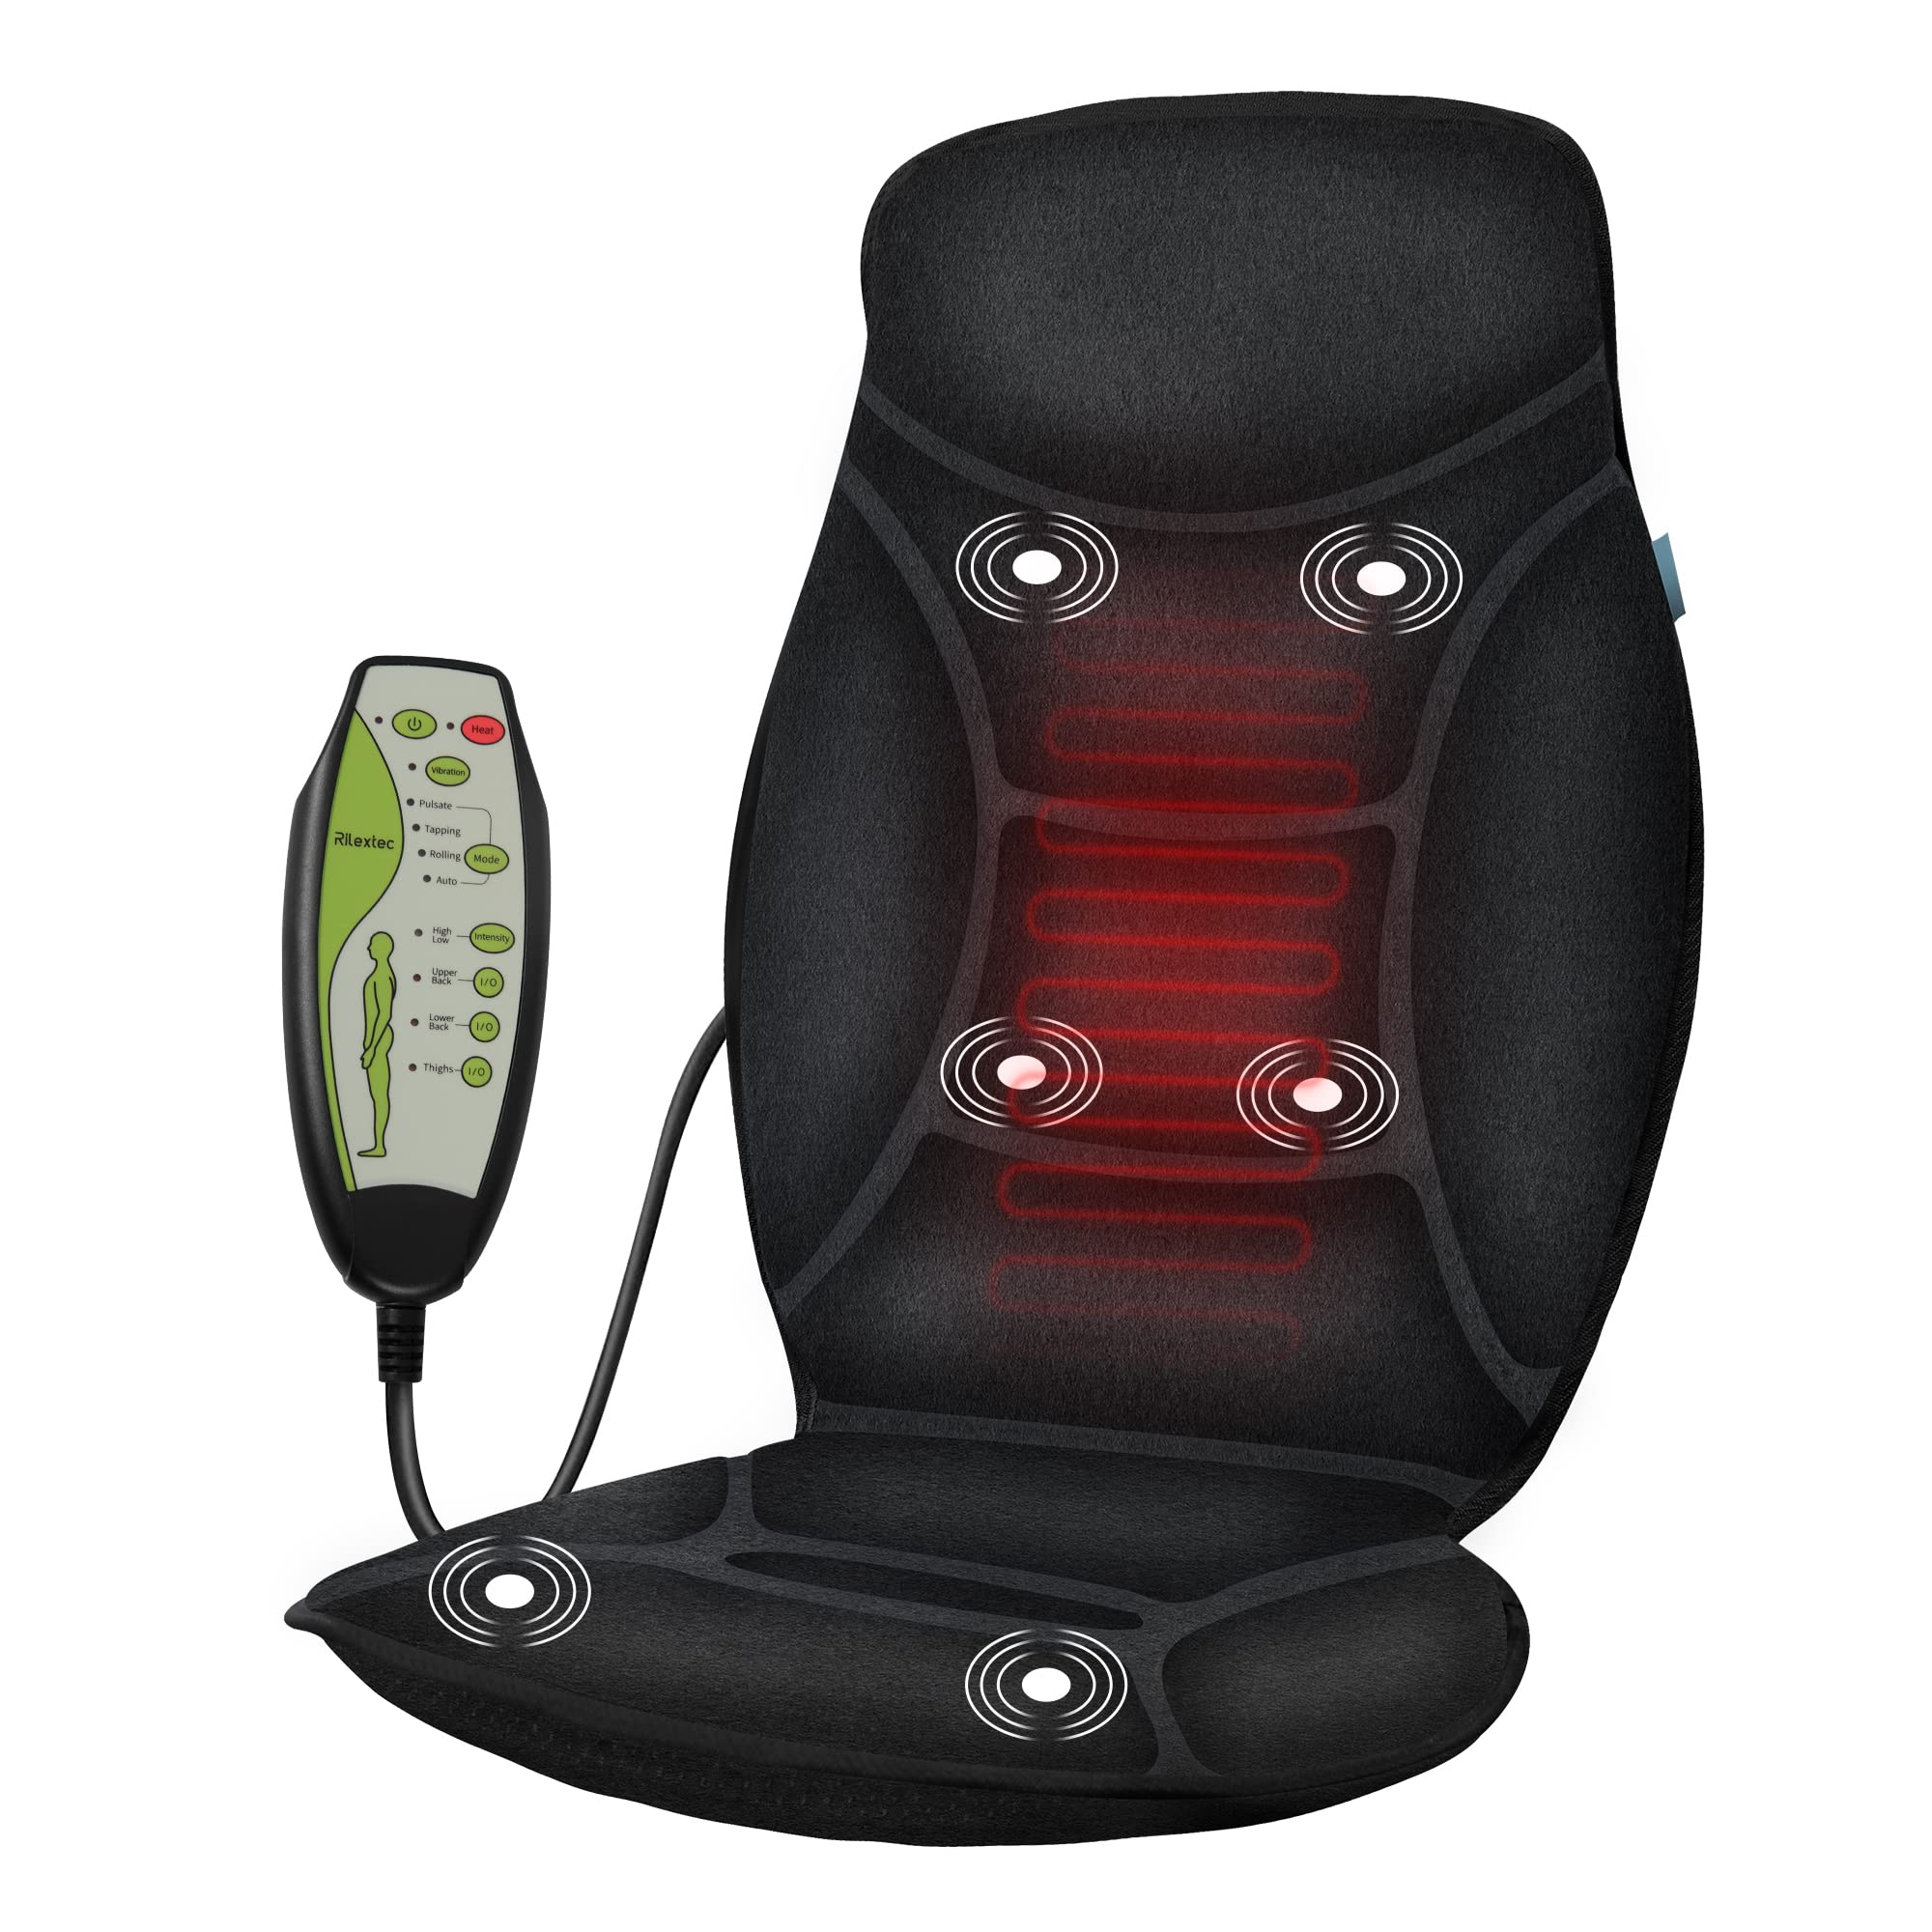 Massage Seat Cushion Back Massager w/ Heat & 6 Vibration Motors for Home - Black